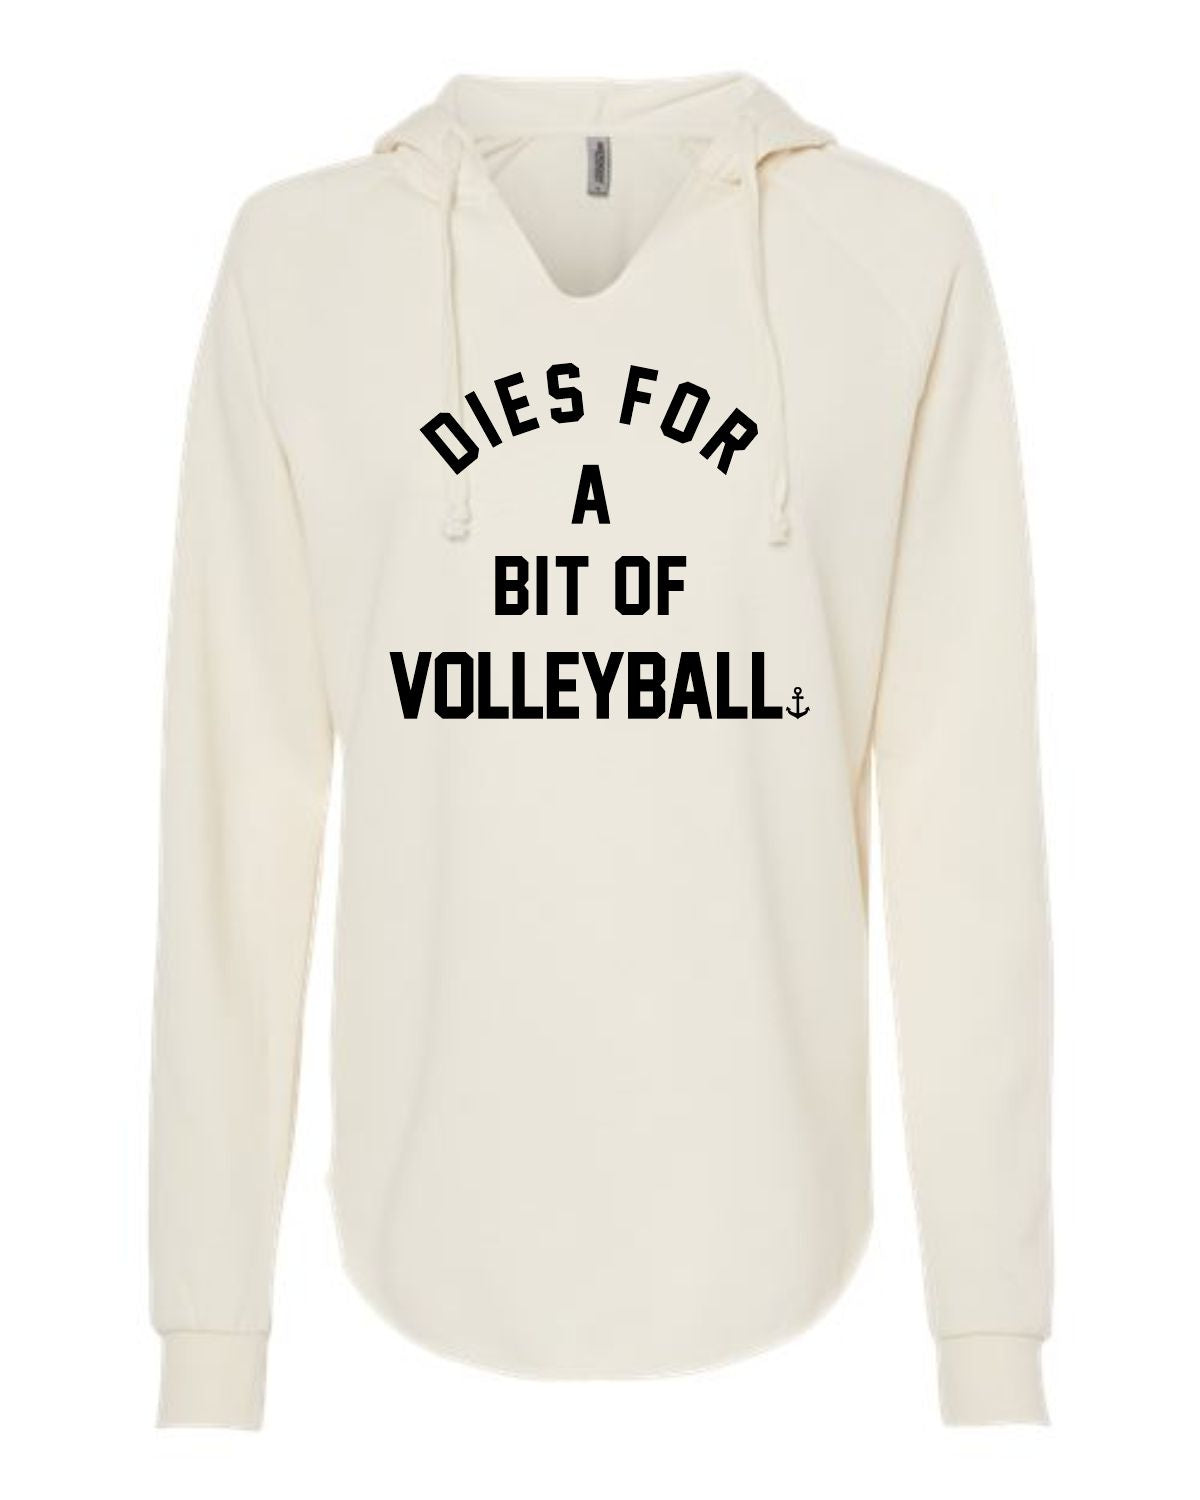 "Dies For A Bit Of Volleyball" Ladies' Hoodie